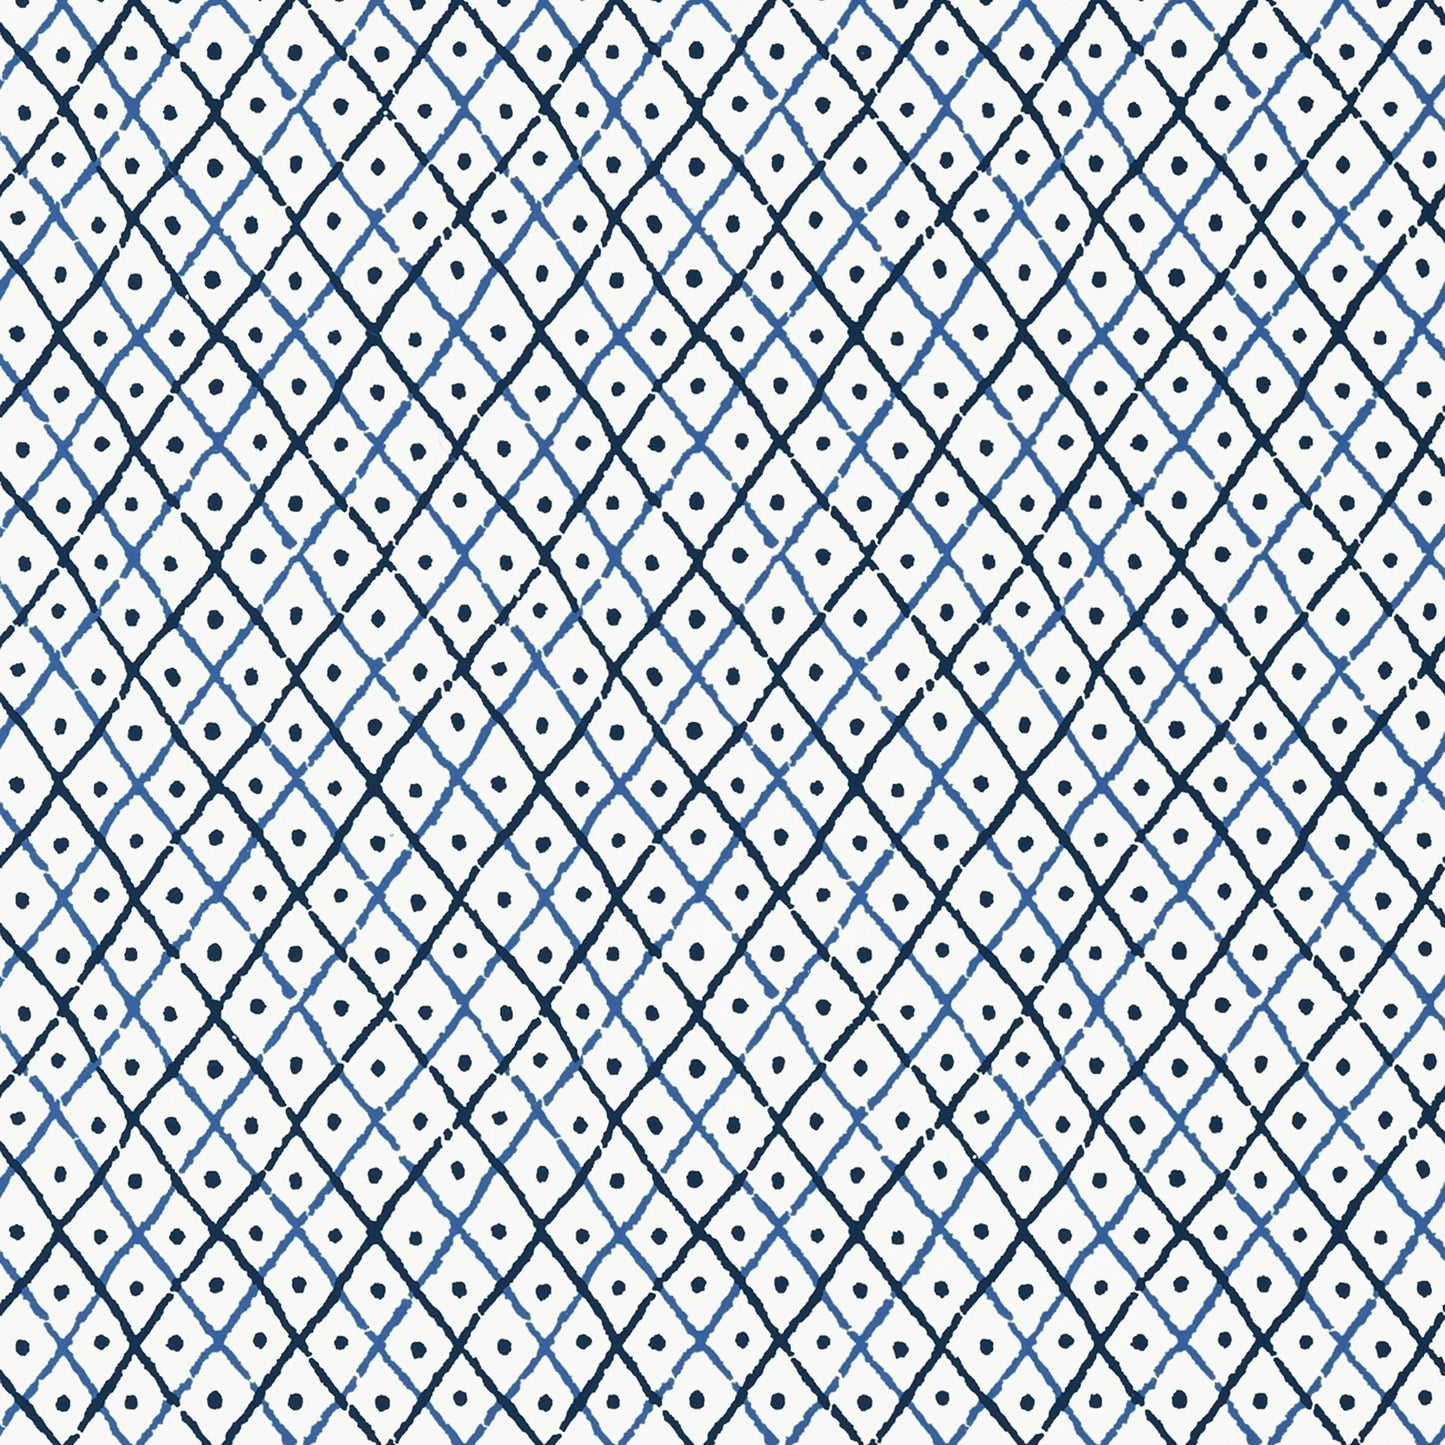 Purchase  Ann French Wallpaper Item# AT78750 pattern name  Mini Trellis